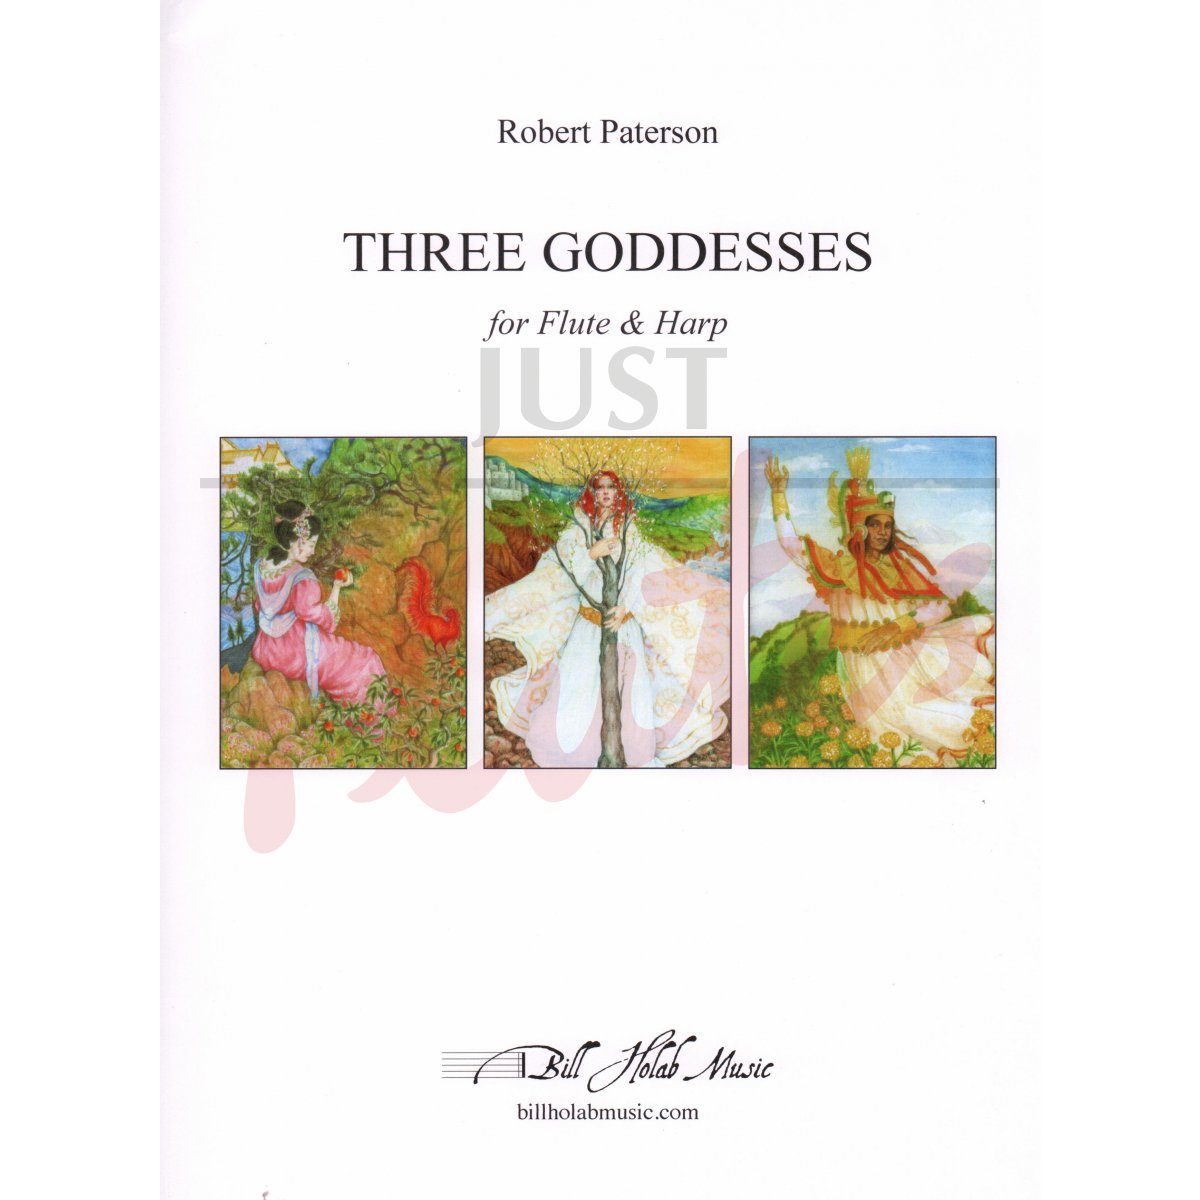 Three Goddesses for Flute and Harp